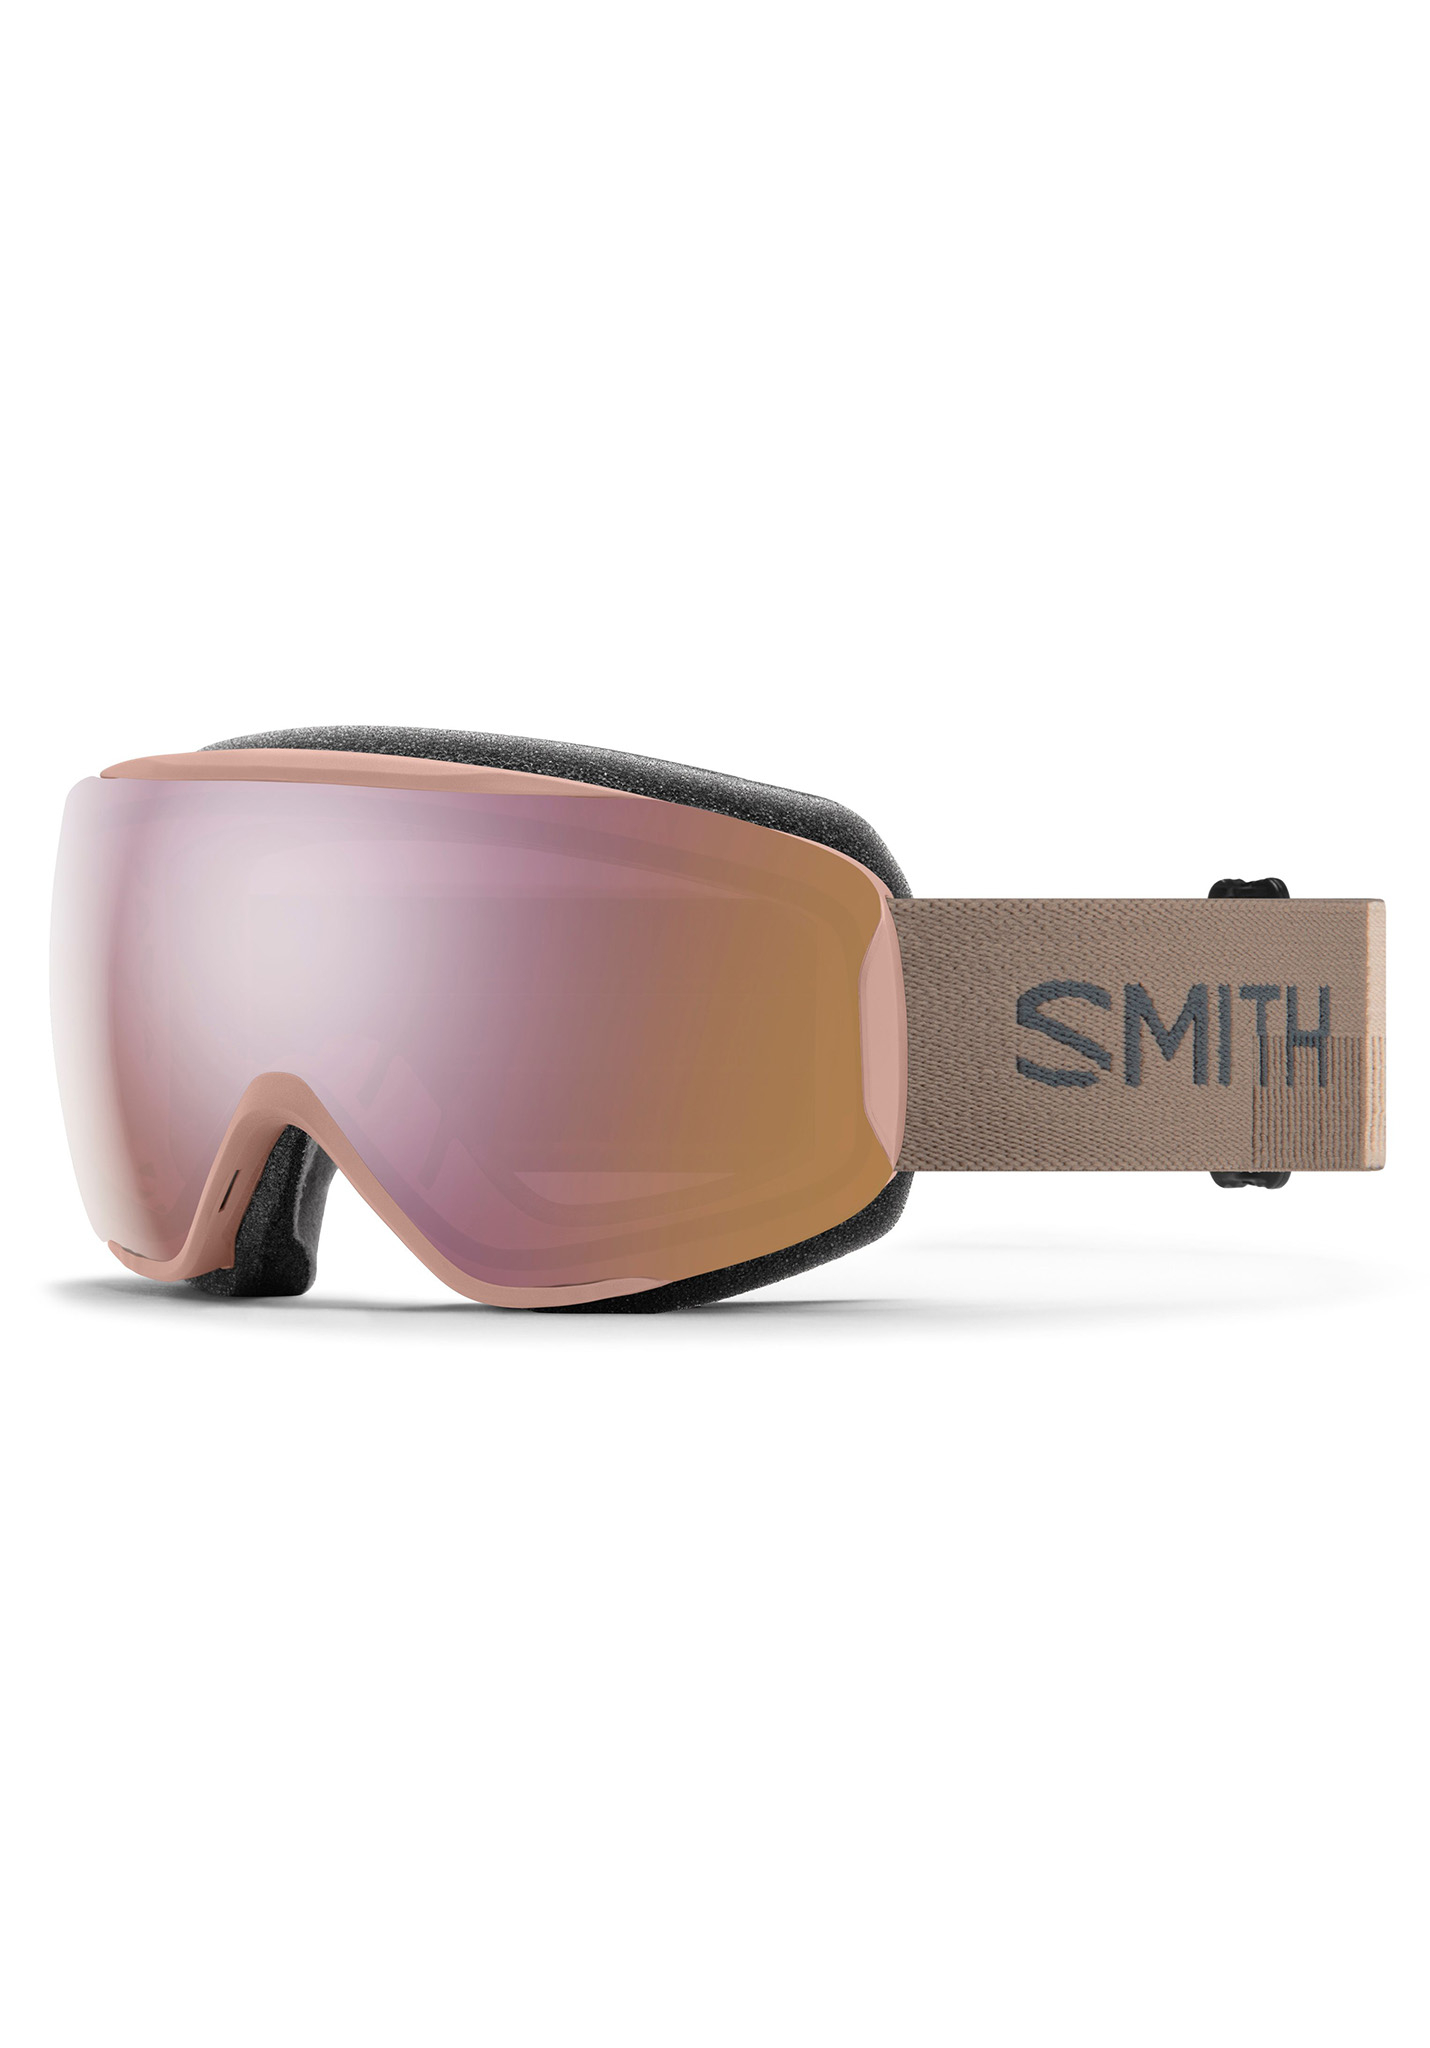 Smith Moment Snowboardbrillen rosenwolke One Size